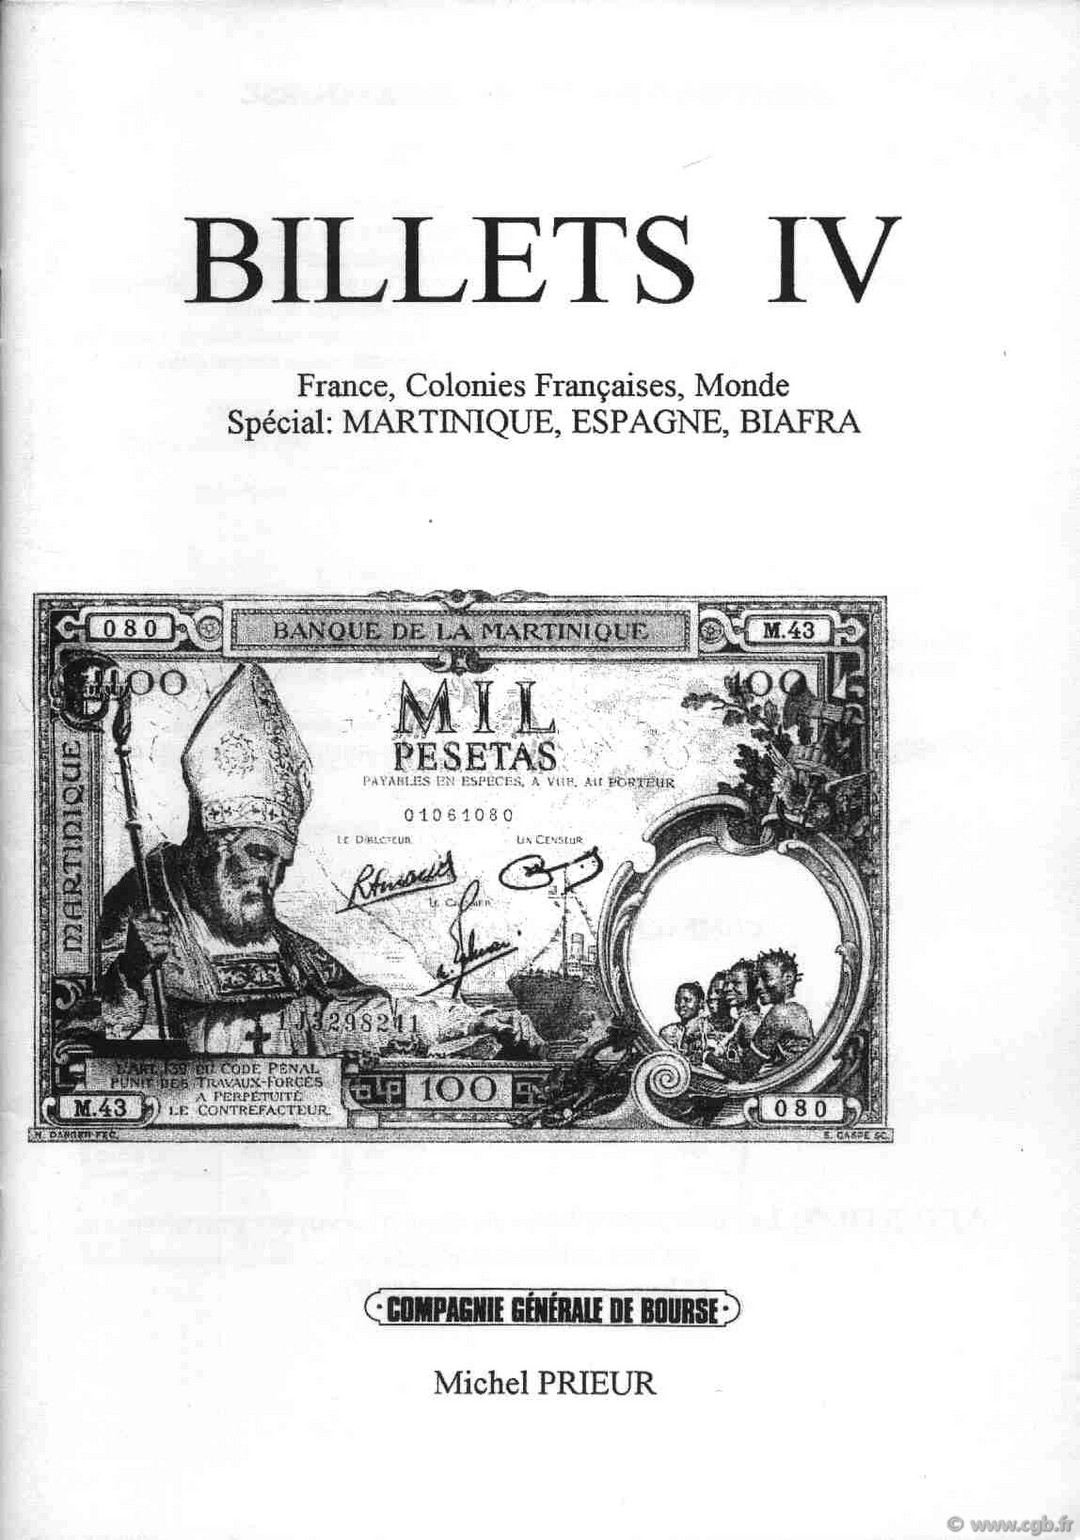 Billets 4, France, Martinique, Espagne, Biafra PRIEUR Michel, DESSAL Jean-Marc